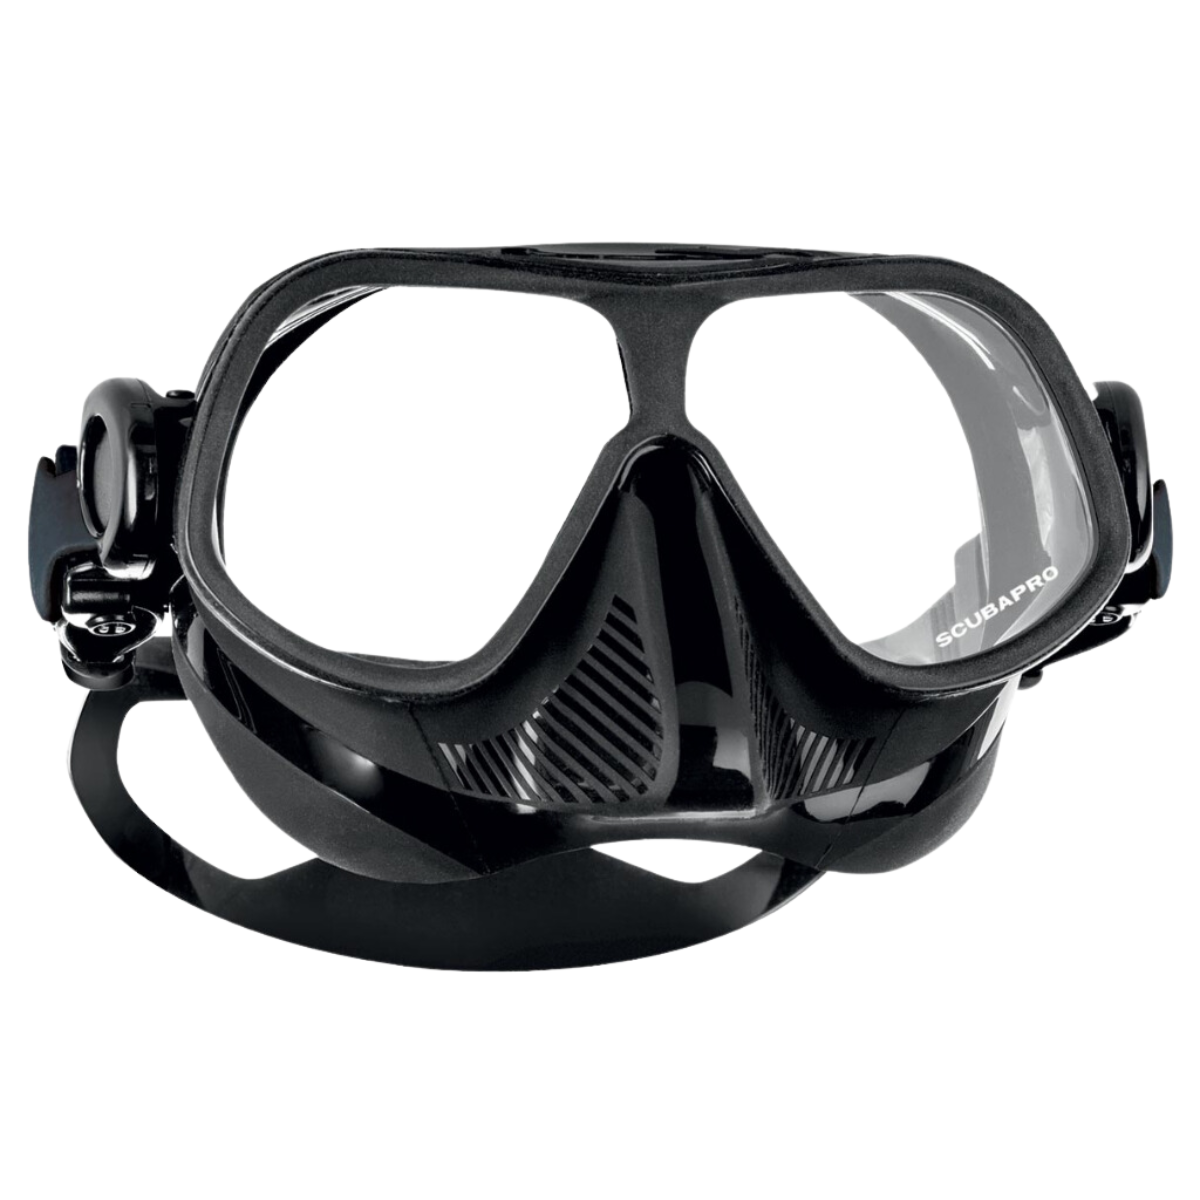 Scubapro Steel Comp Mask